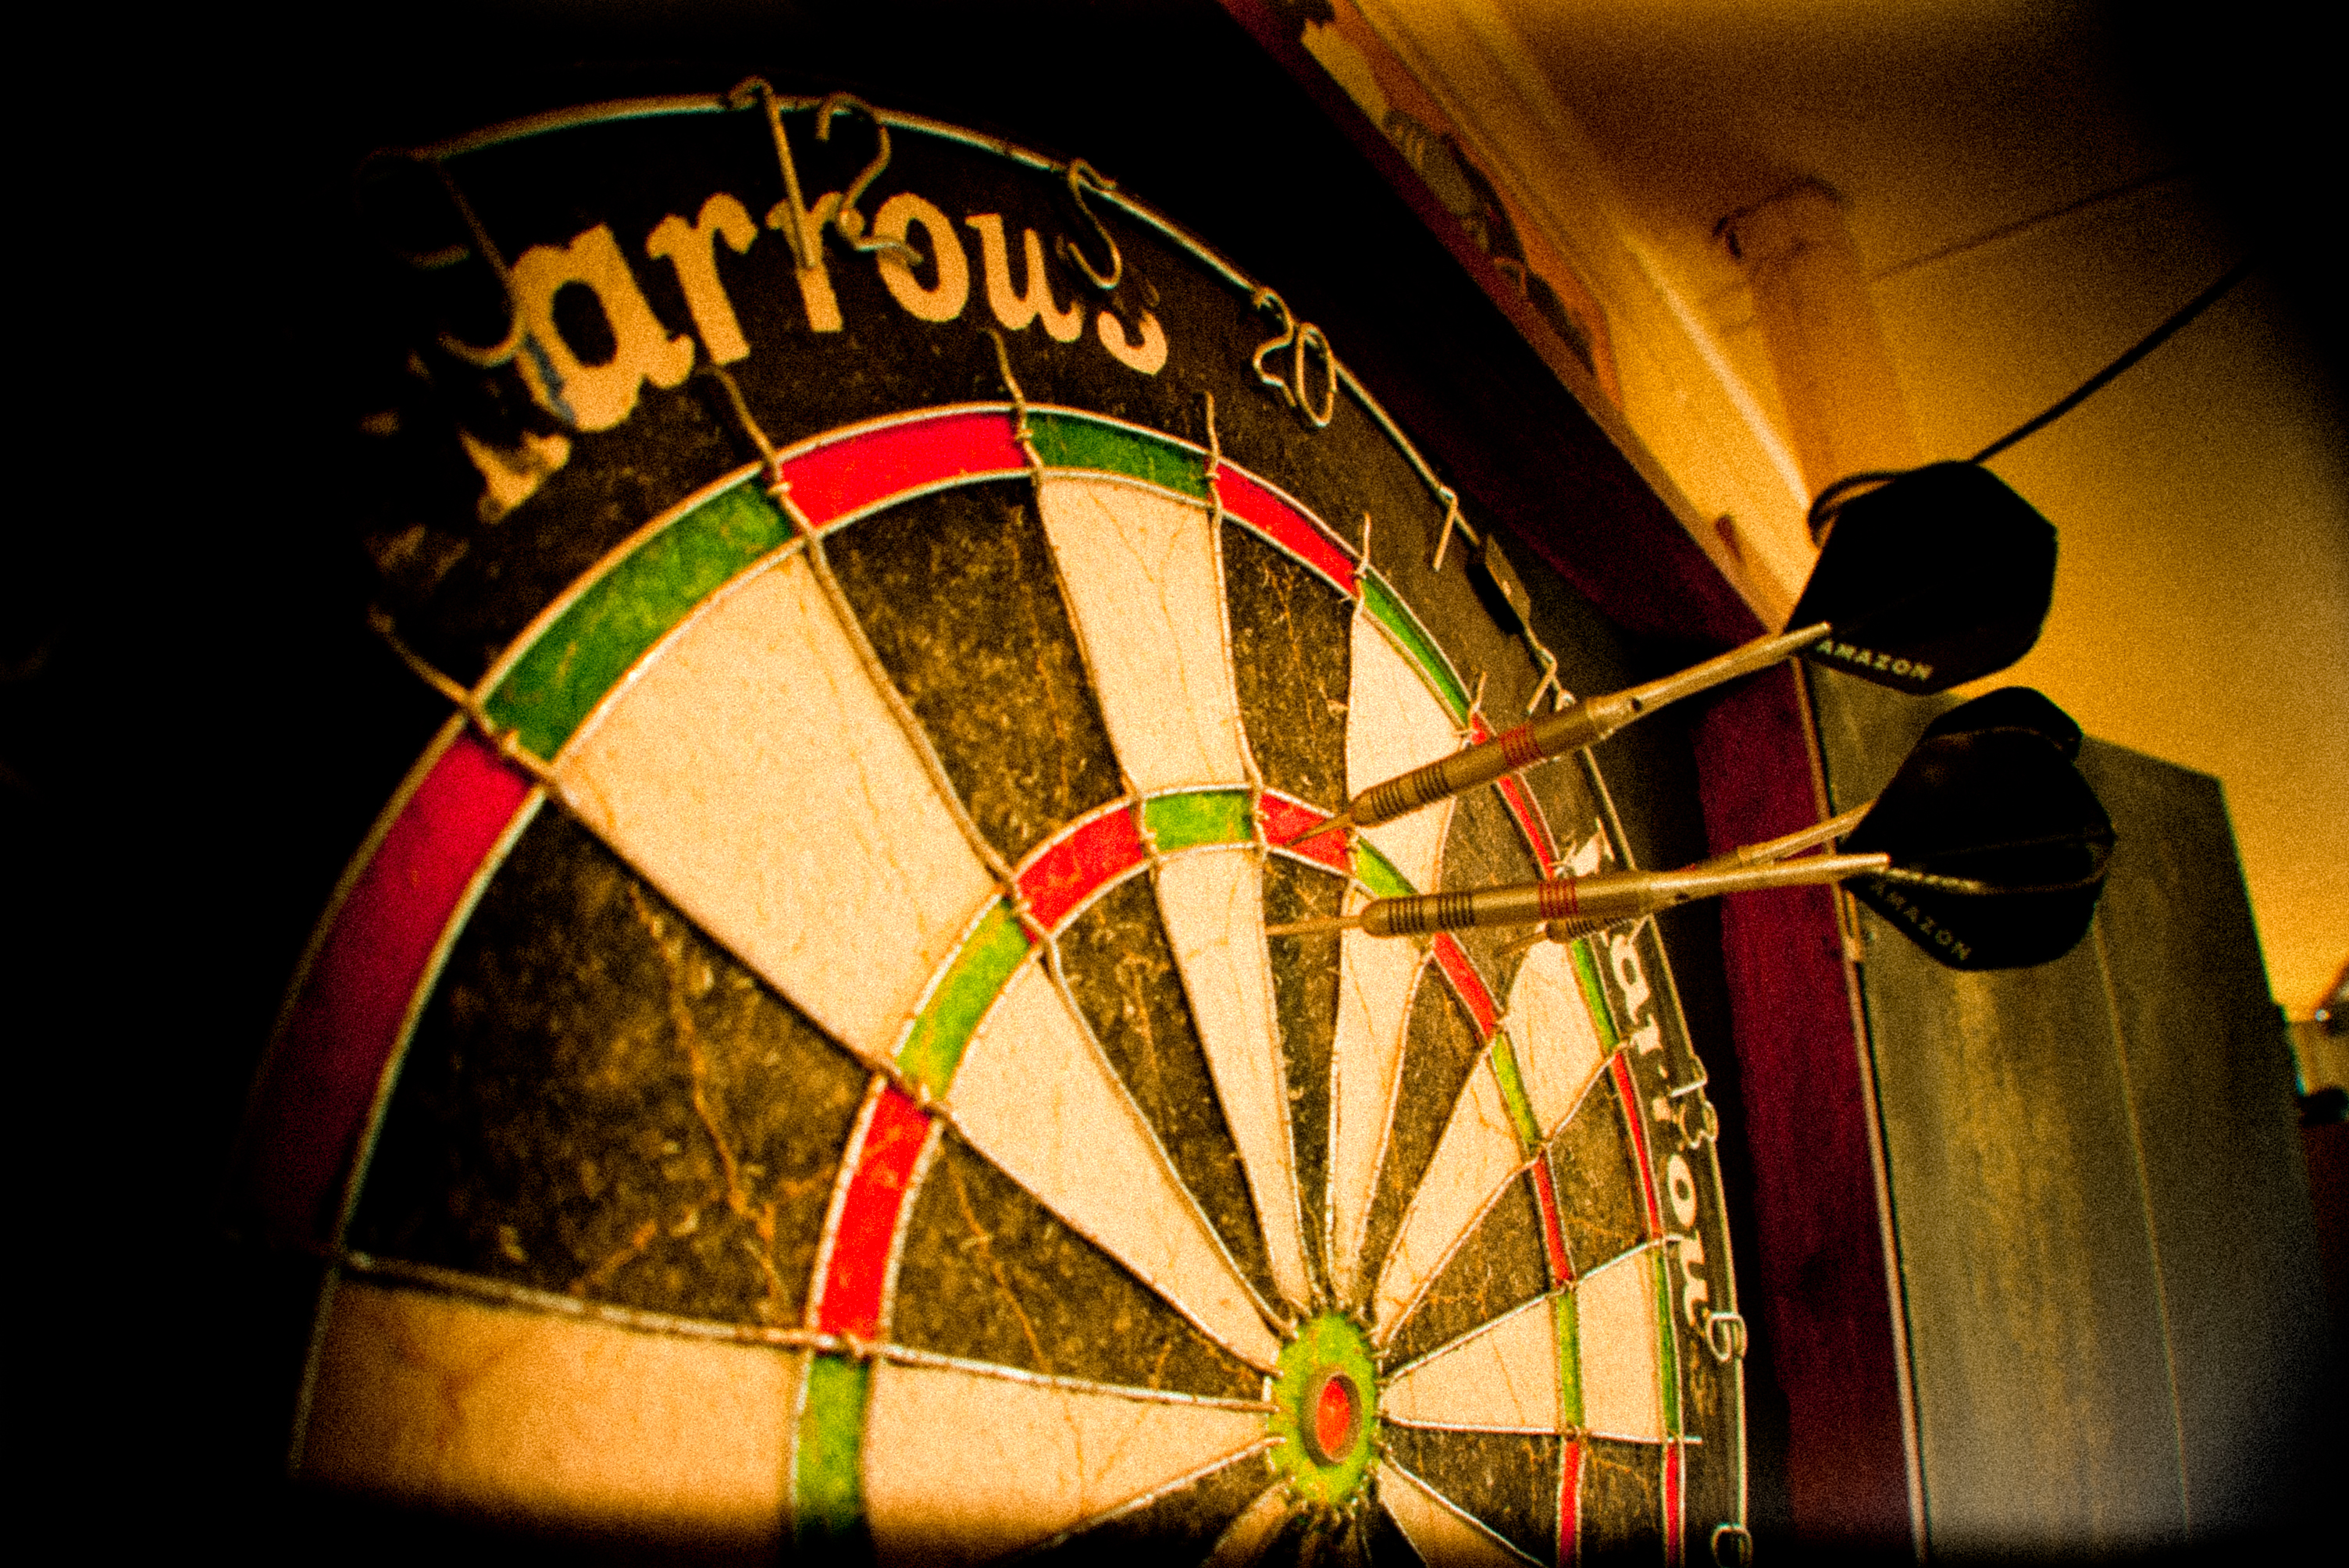 dart wallpaper,games,darts,indoor games and sports,recreation,dartboard